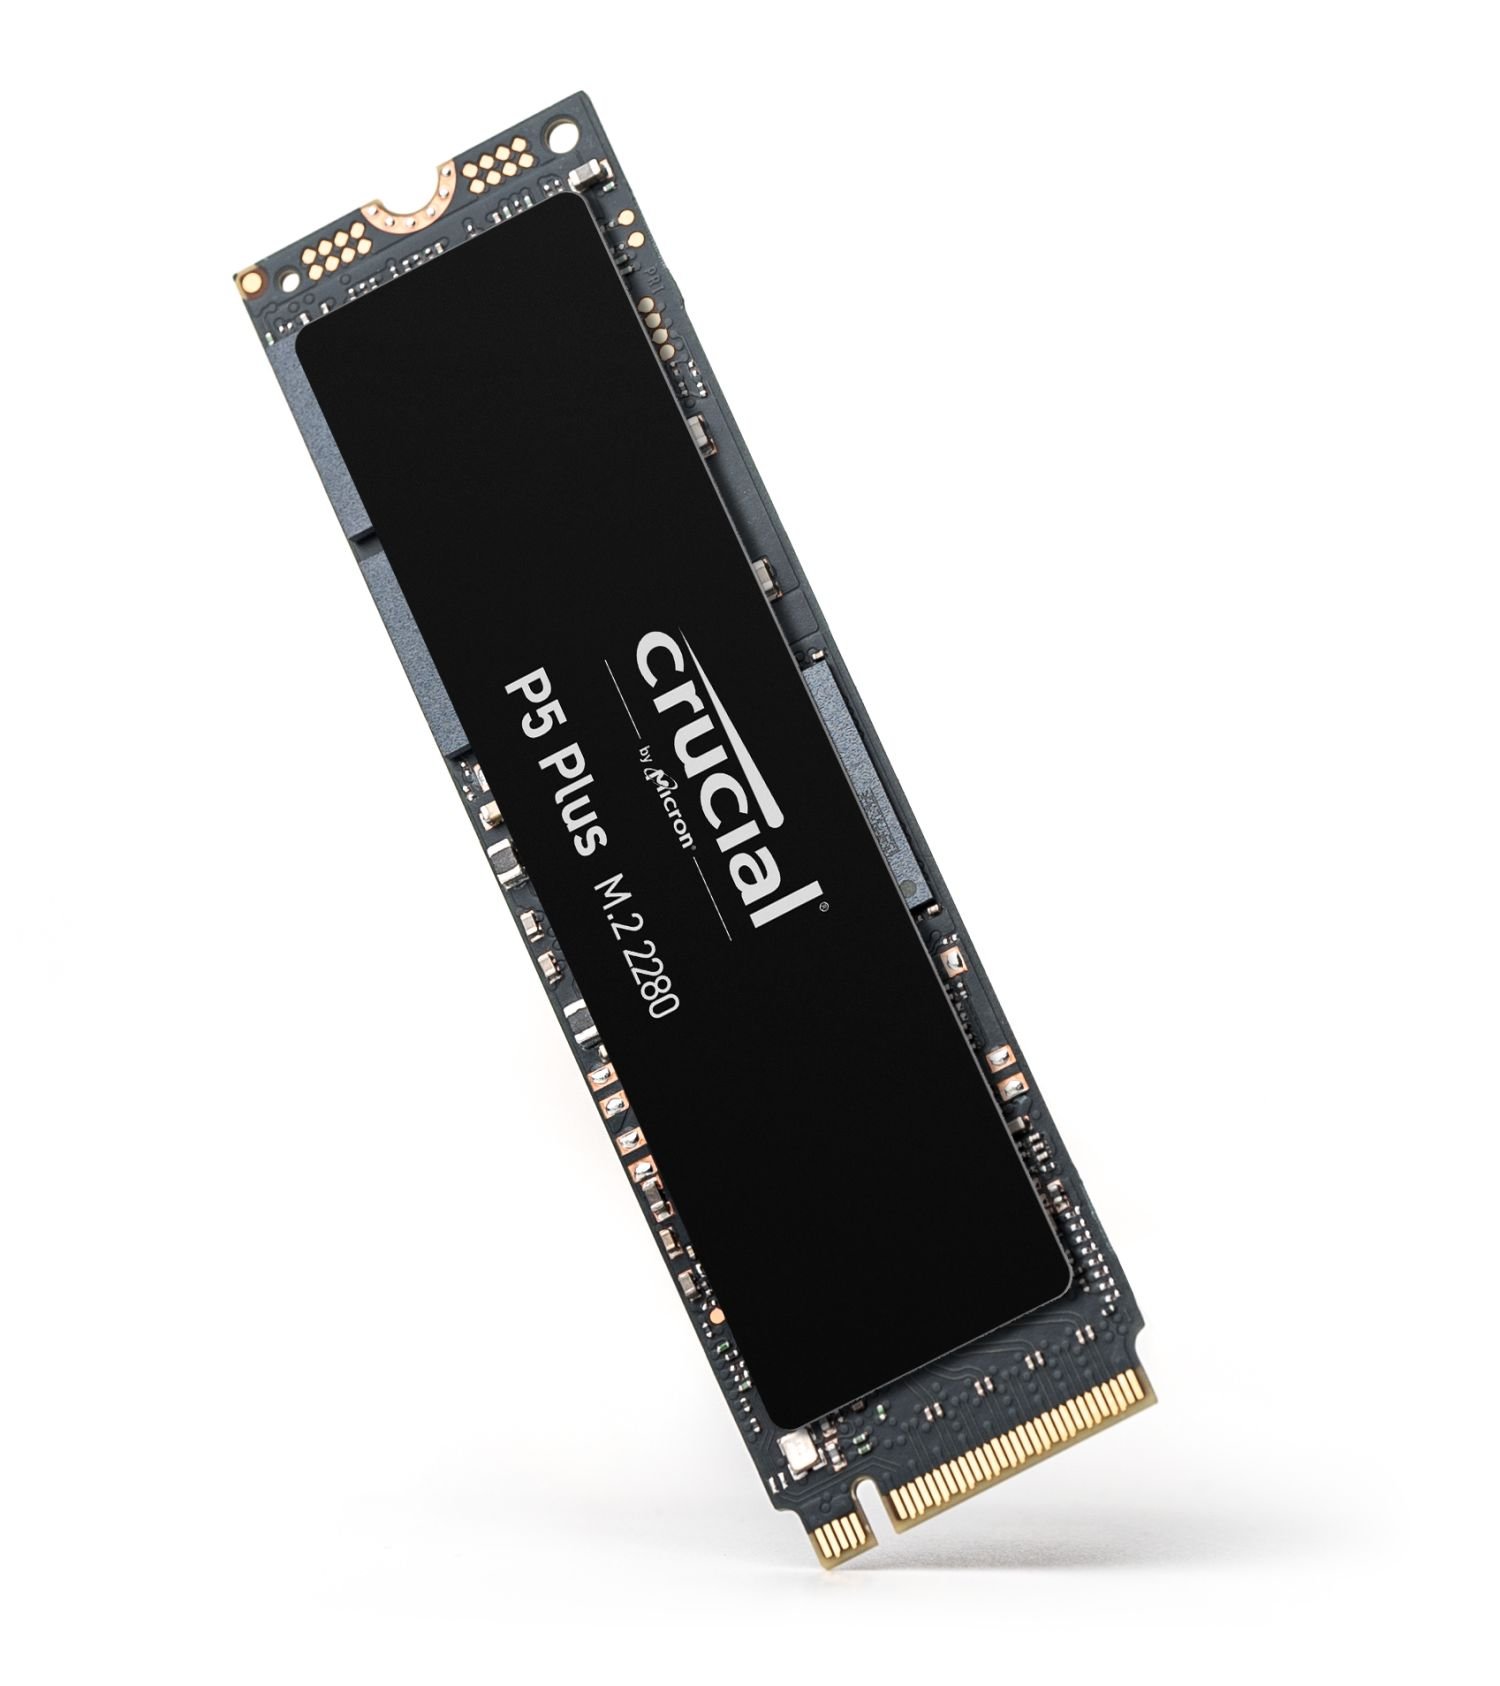 Crucial® P5 Plus SSD